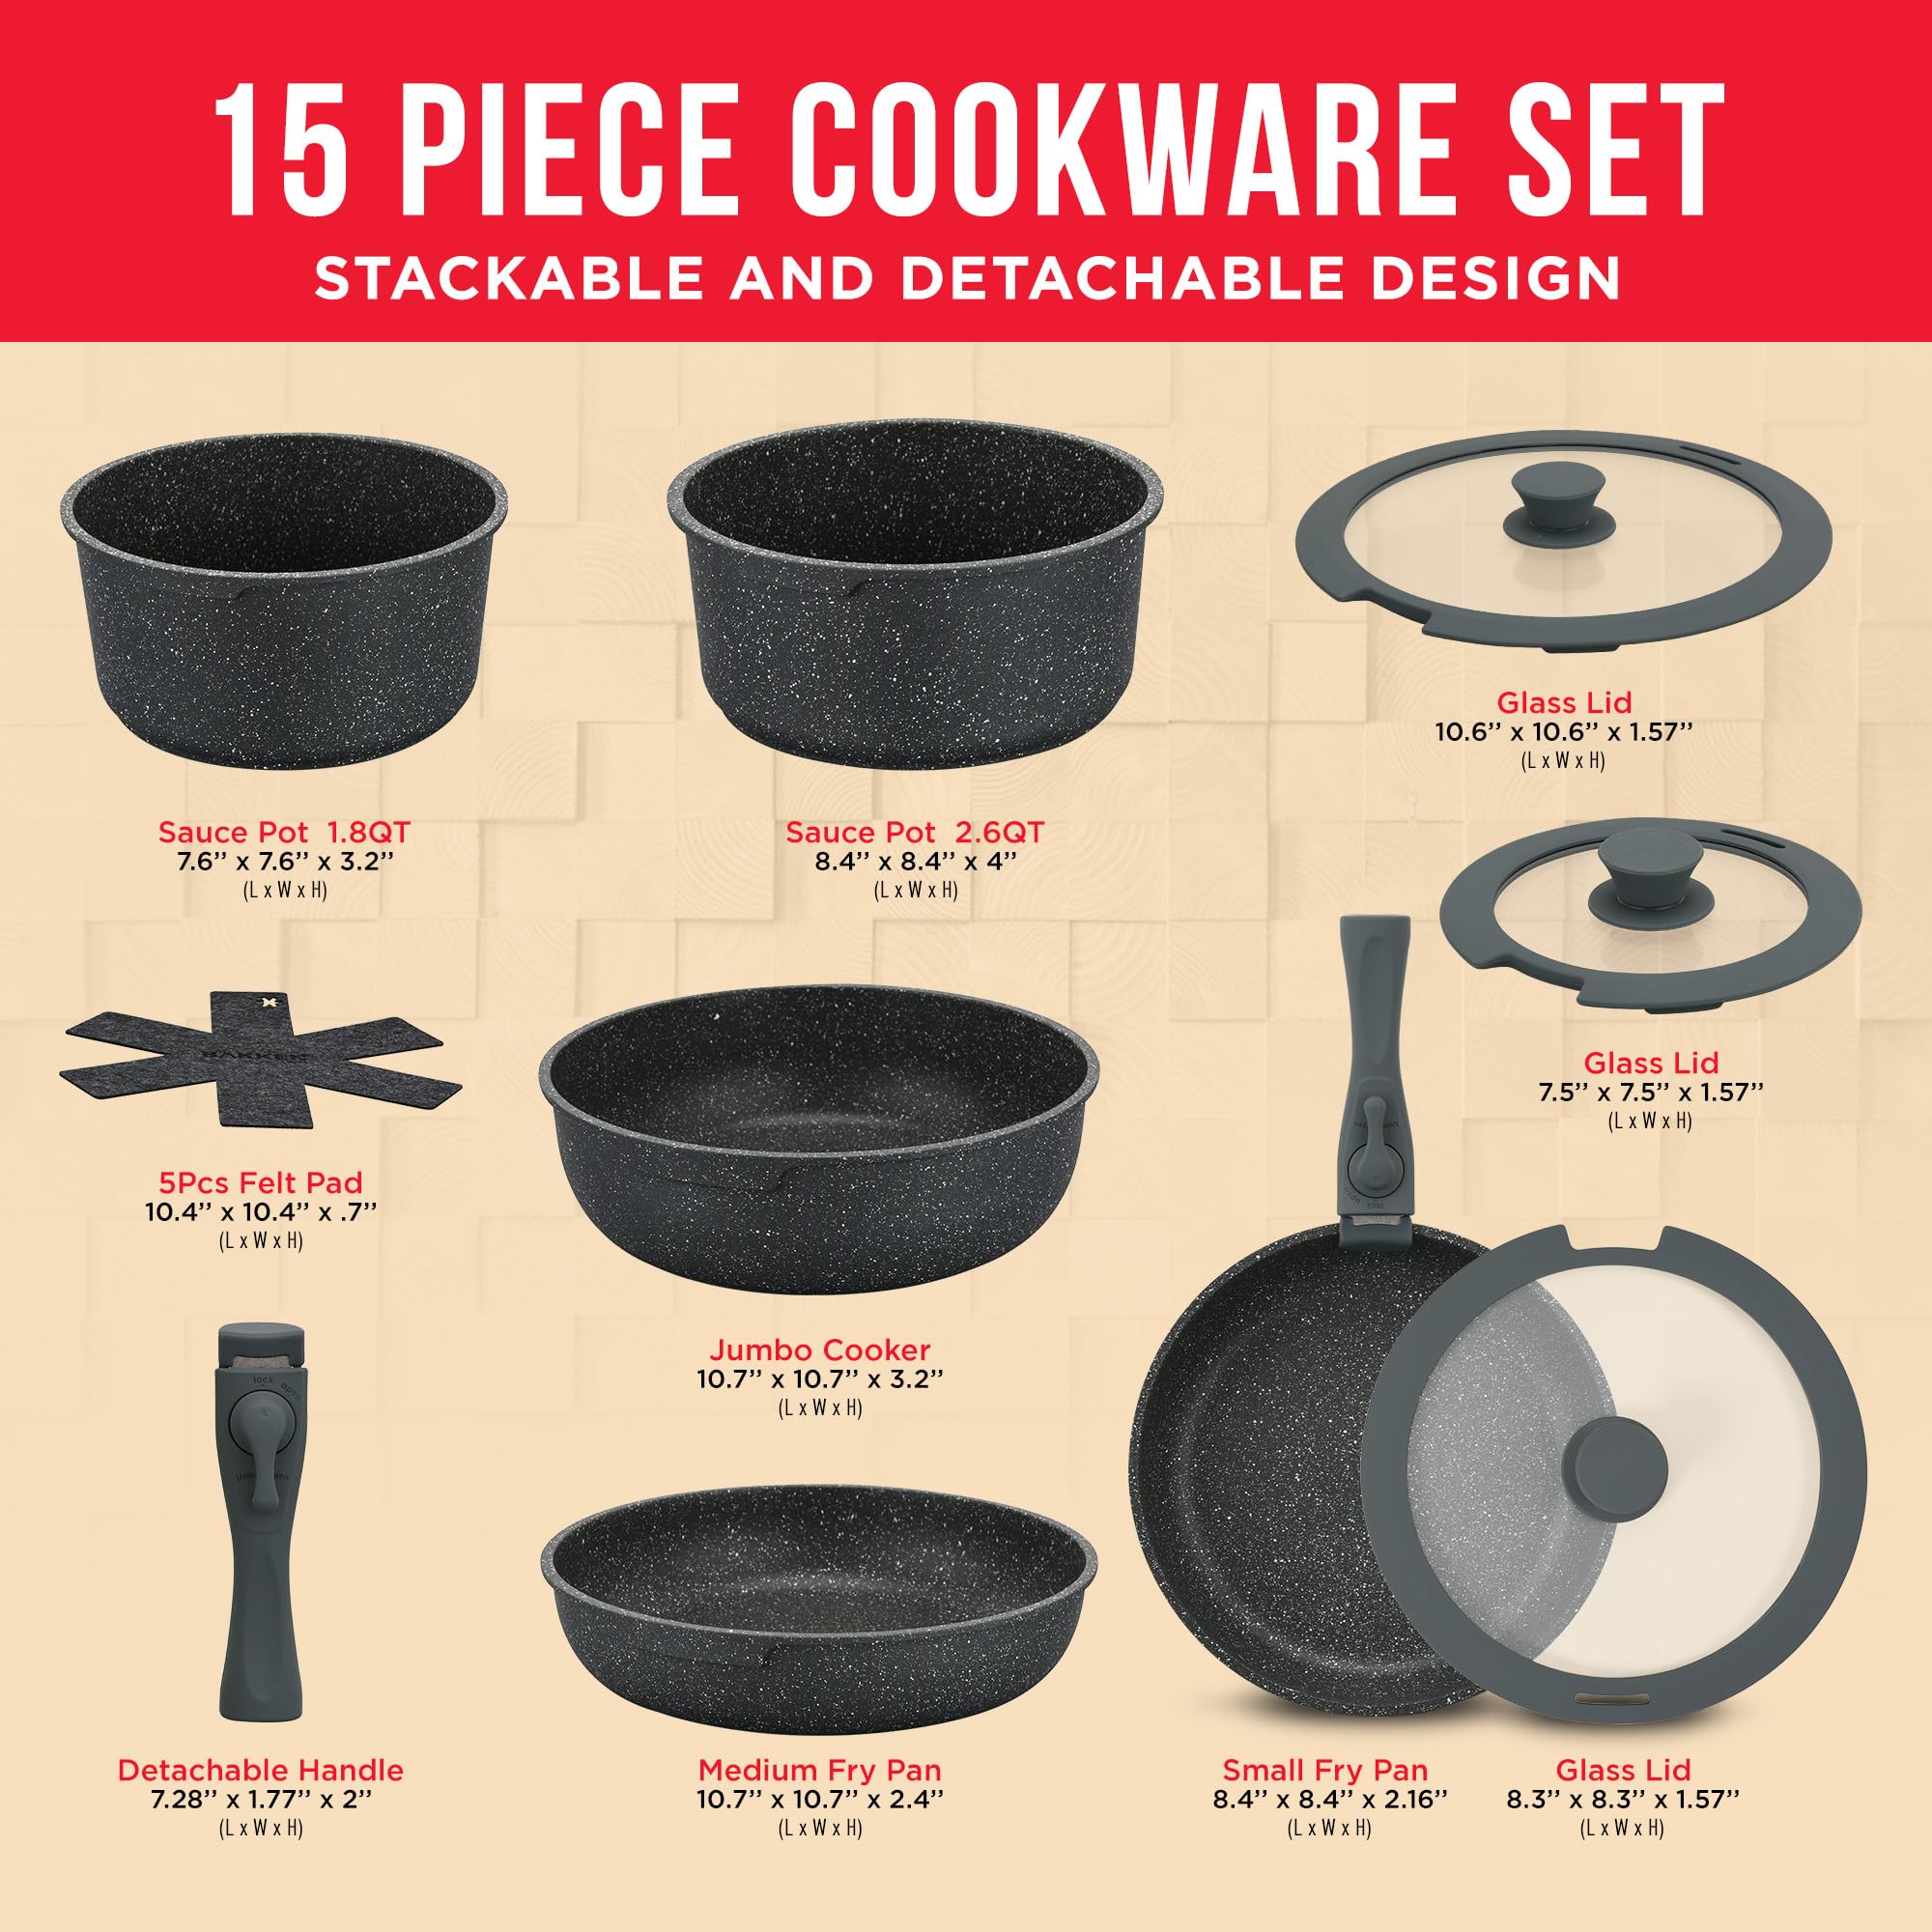 Bakken-Swiss Detachable 15-Piece Cookware Set – Granite Non-Stick – Eco-Friendly – stackable Removable Handles – for All Stoves & Oven-Safe - marble Black coating